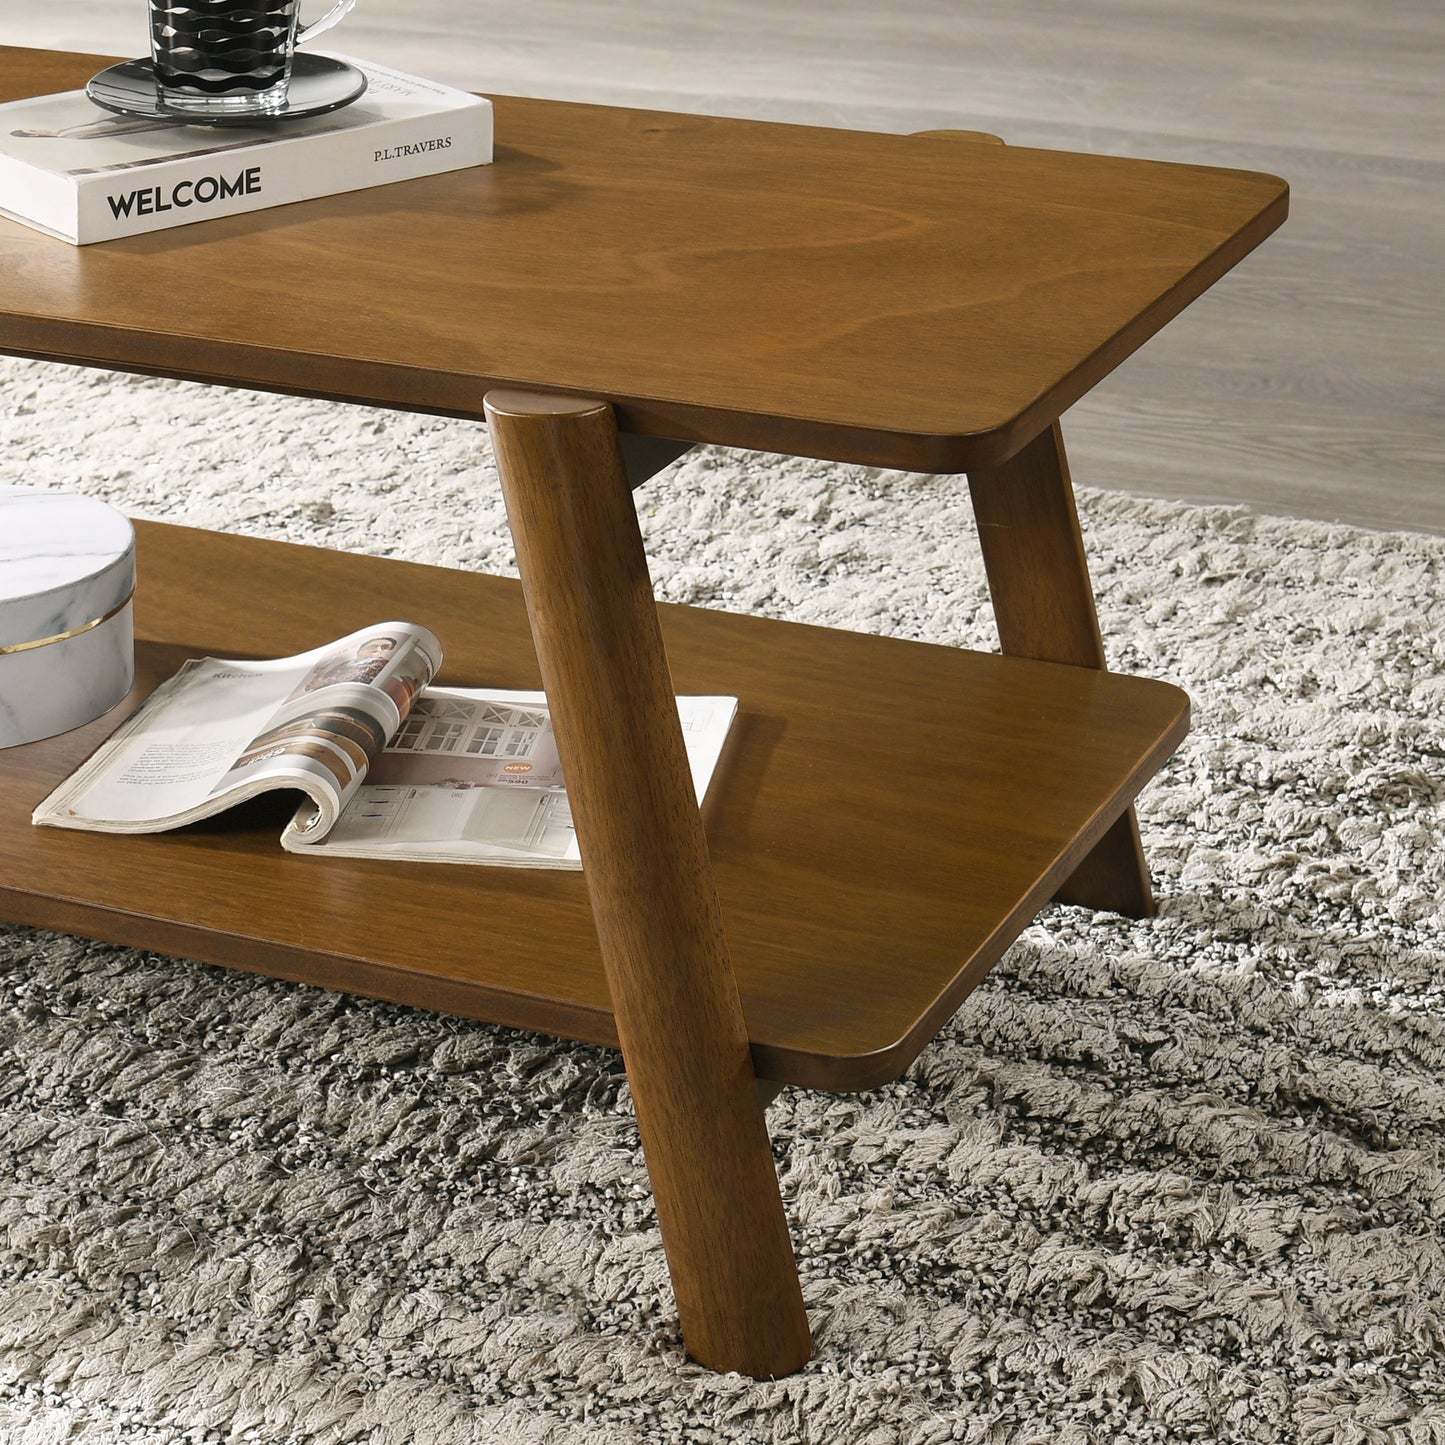 Metz Mid-Century Modern Wood Shelf 3-Piece Coffee Table Set, Walnut Finish